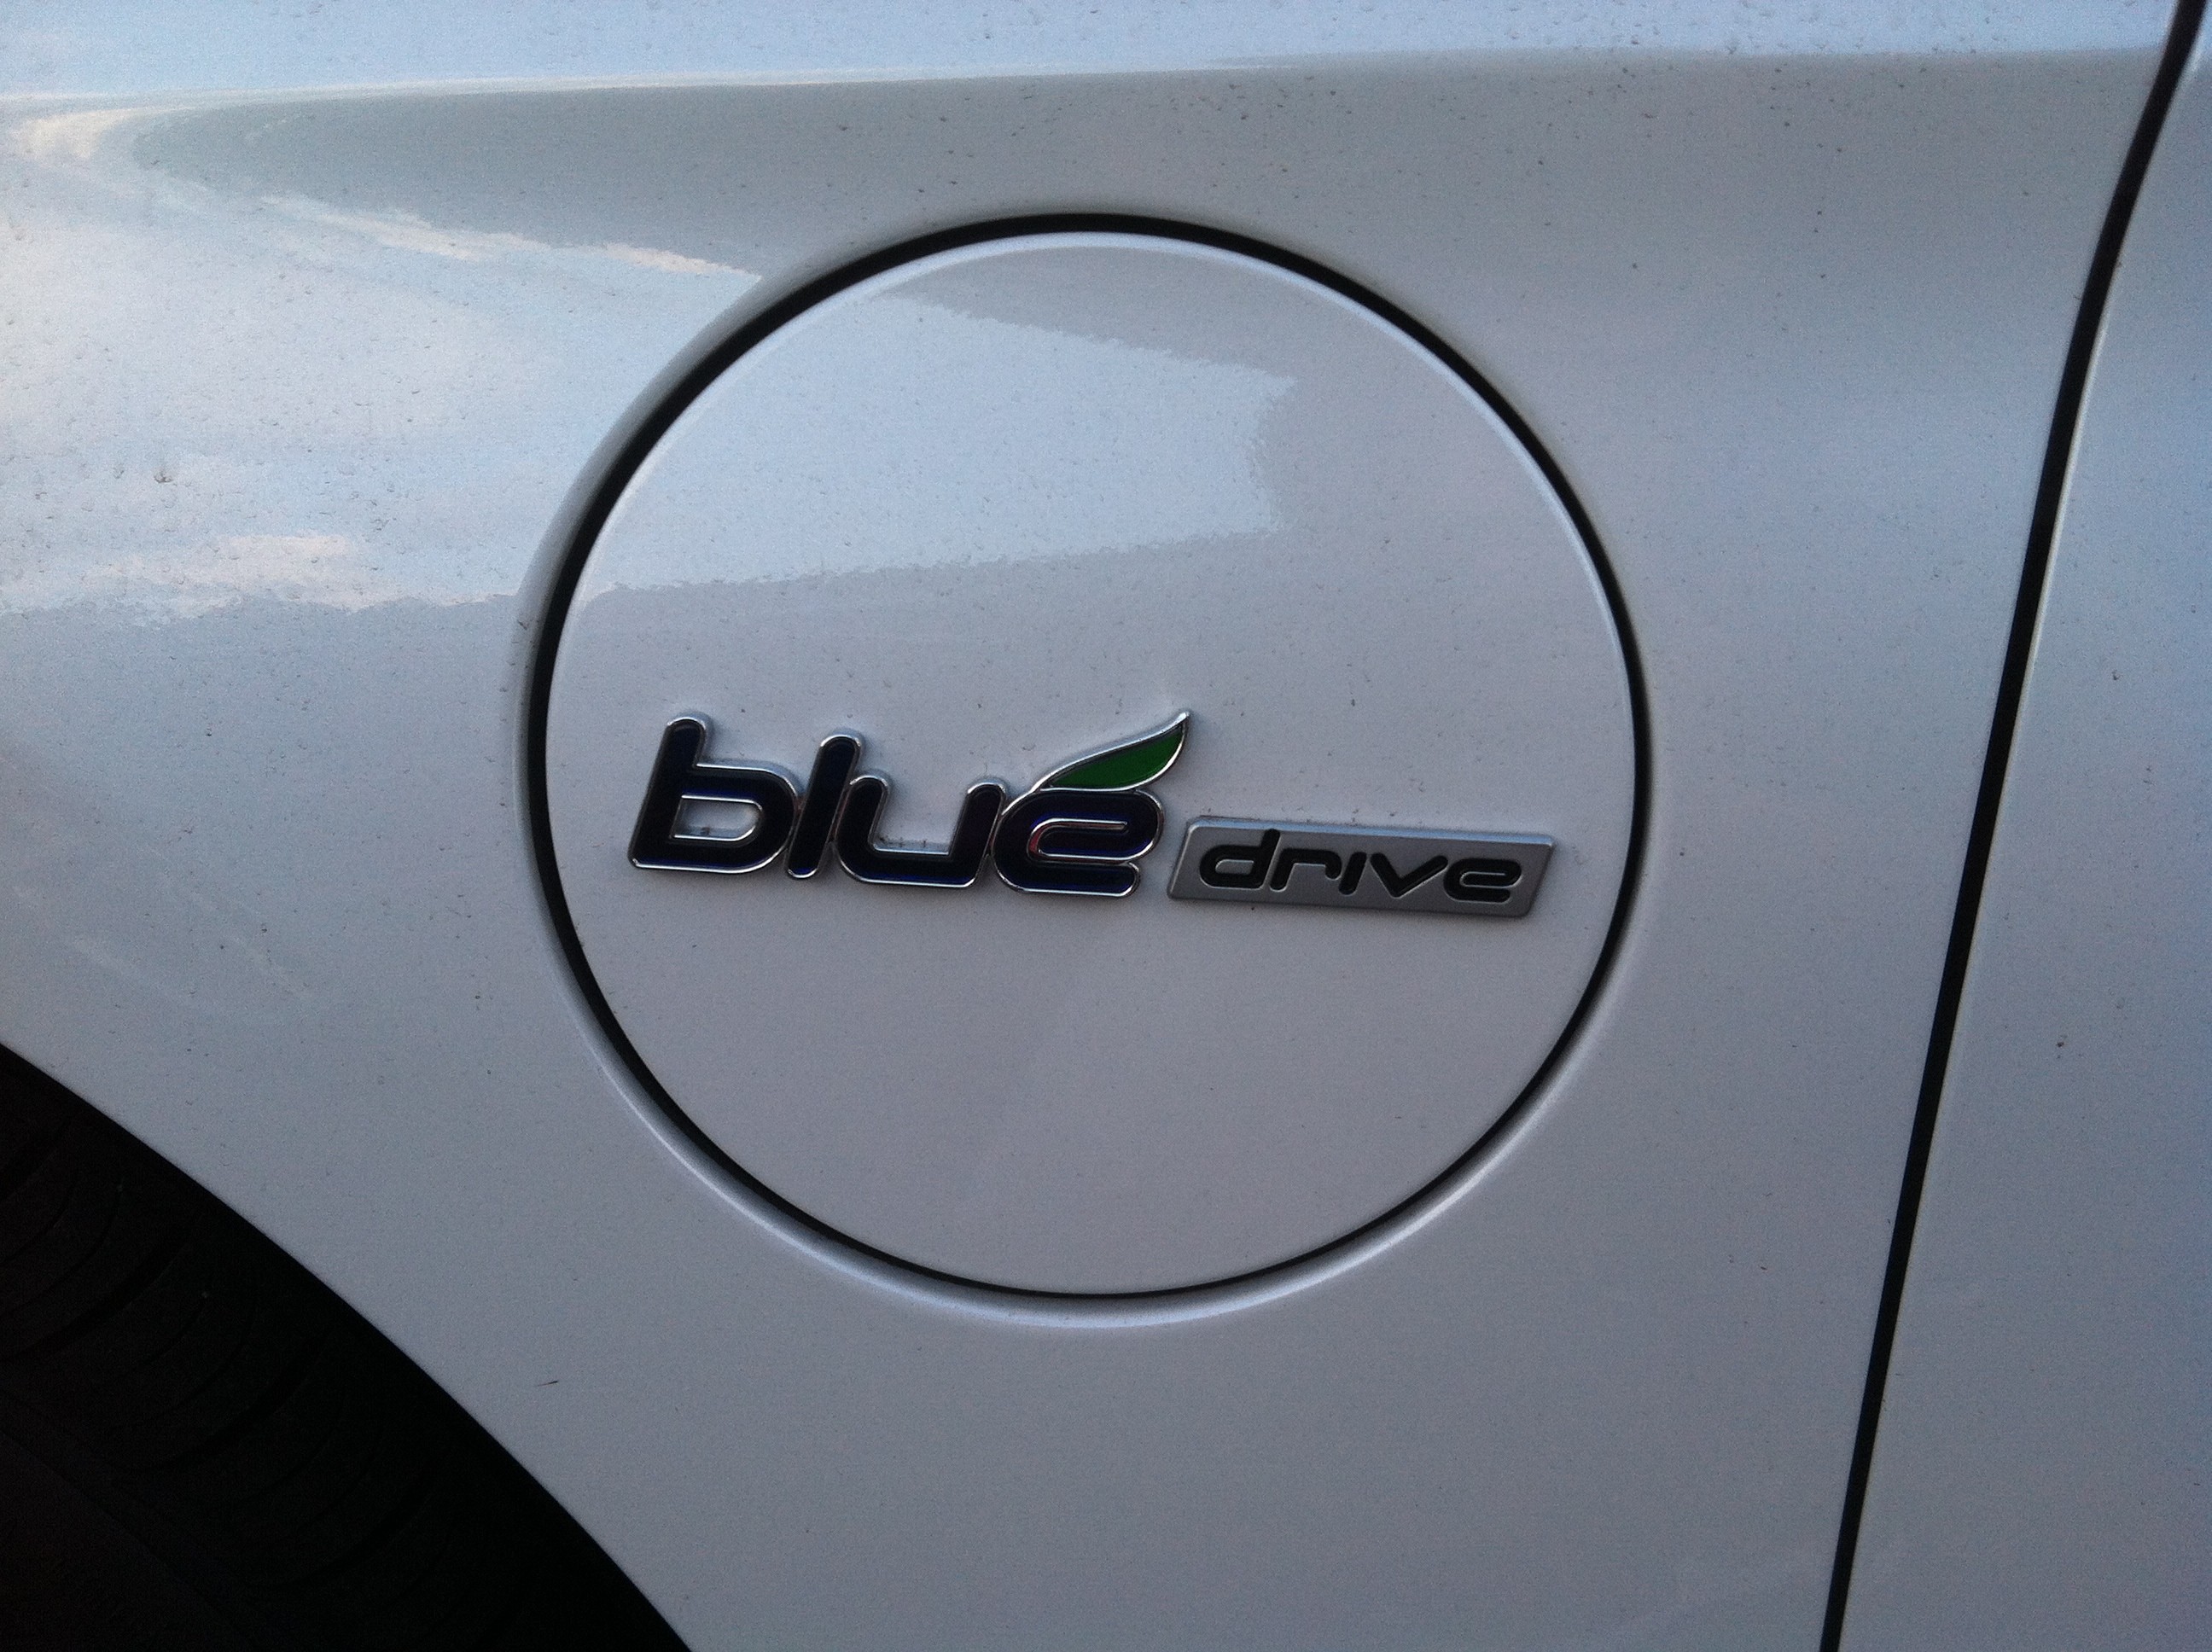 File:Hyundai Sonata 2017 Plug-In Hybrid Limited Sedan Blue Drive Badge.jpg  - Wikimedia Commons